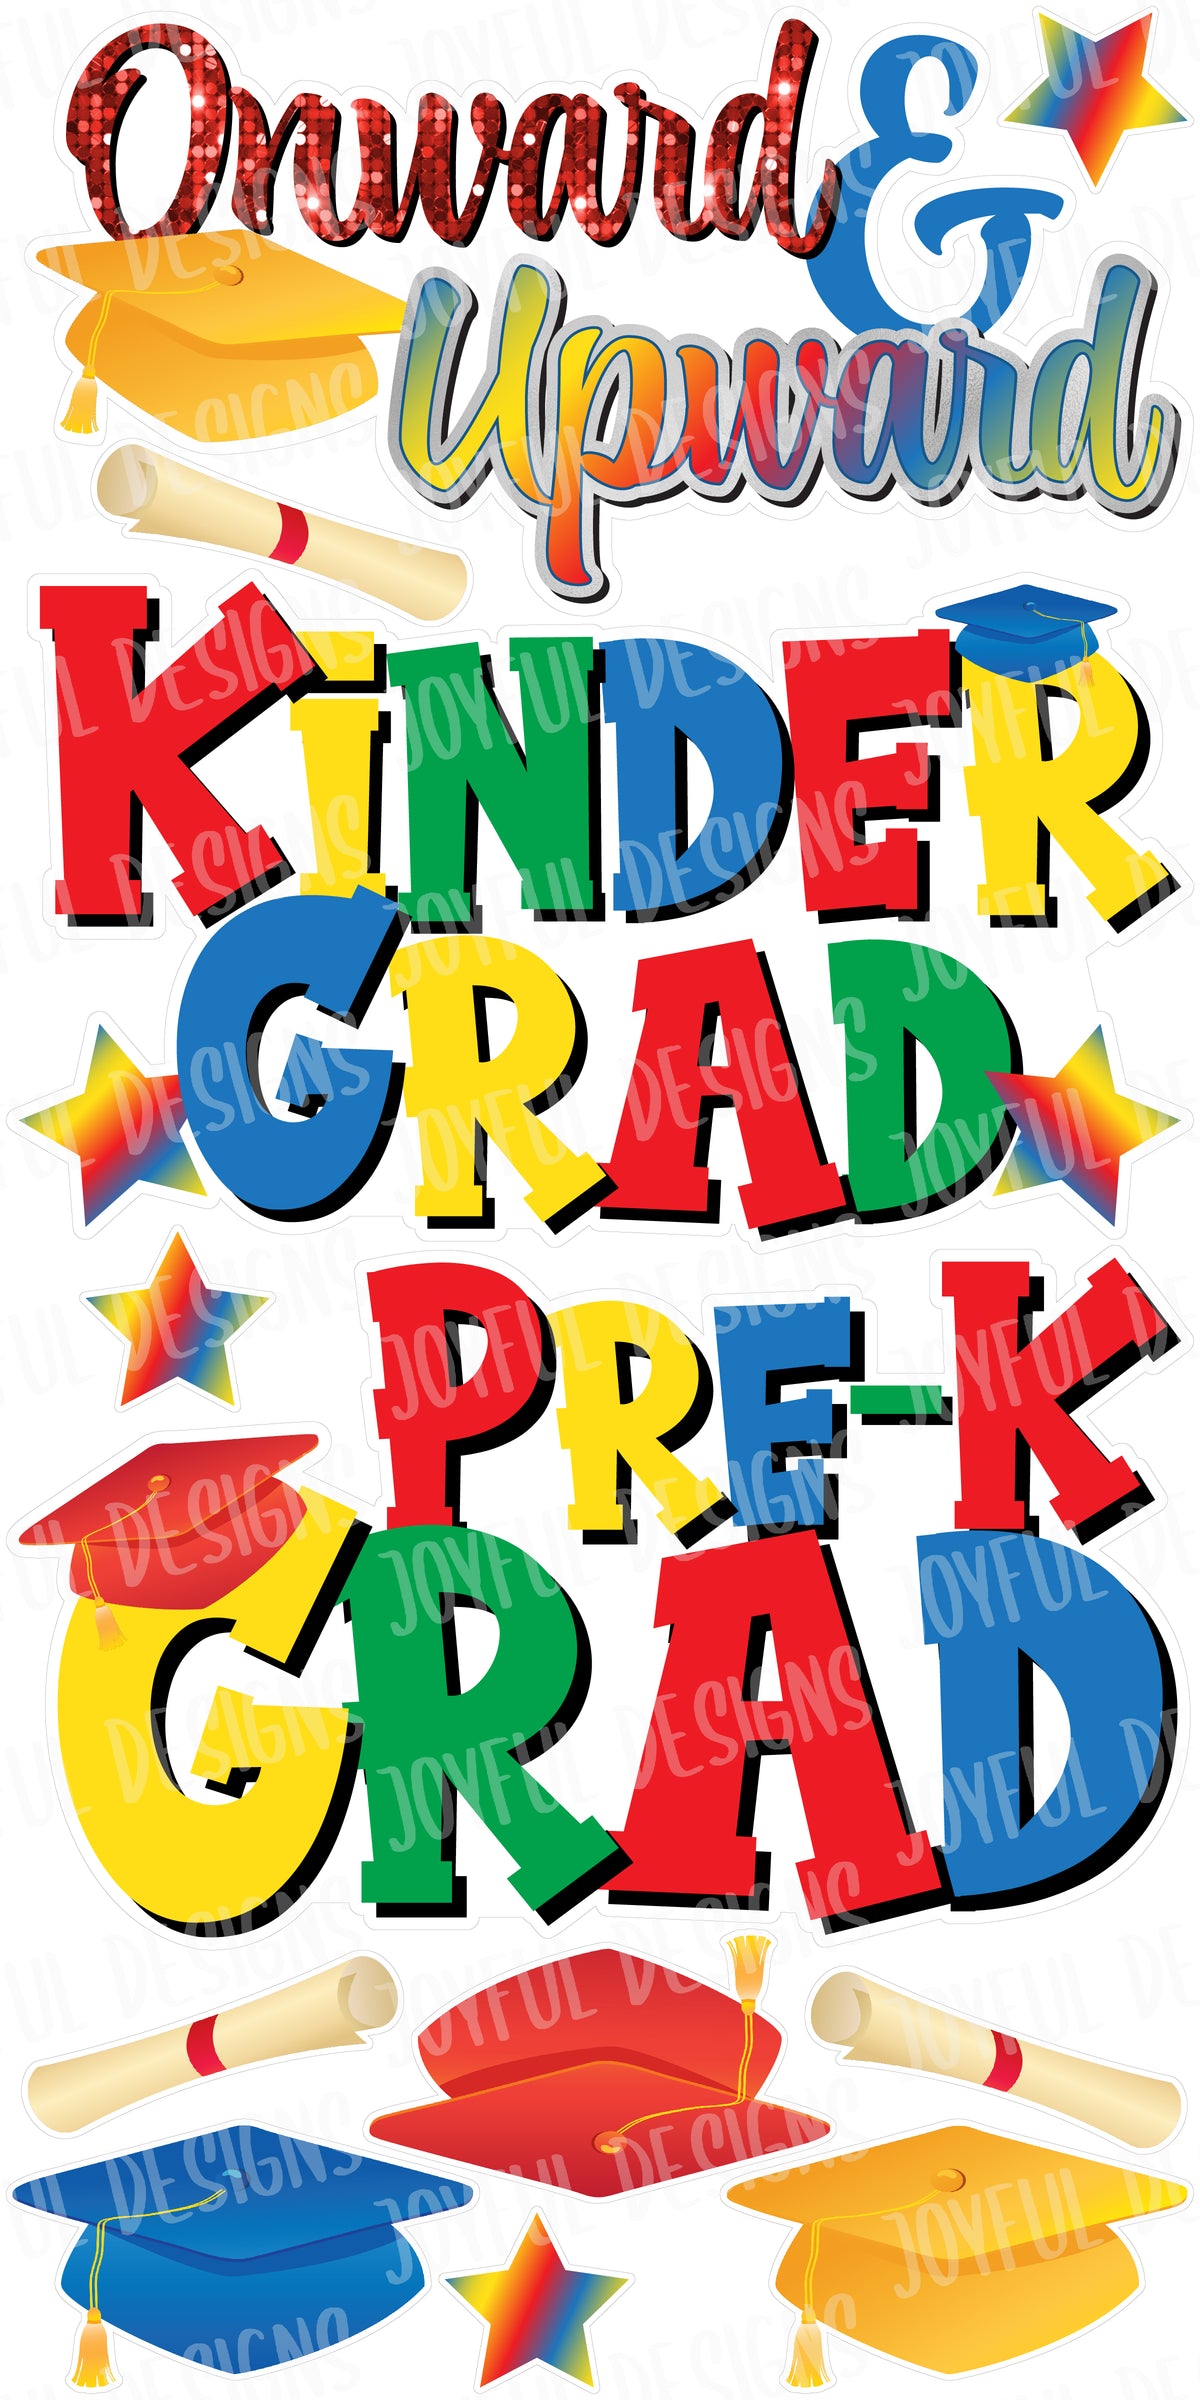 Kinder and Preschool Grad Centerpieces - 3 Color options